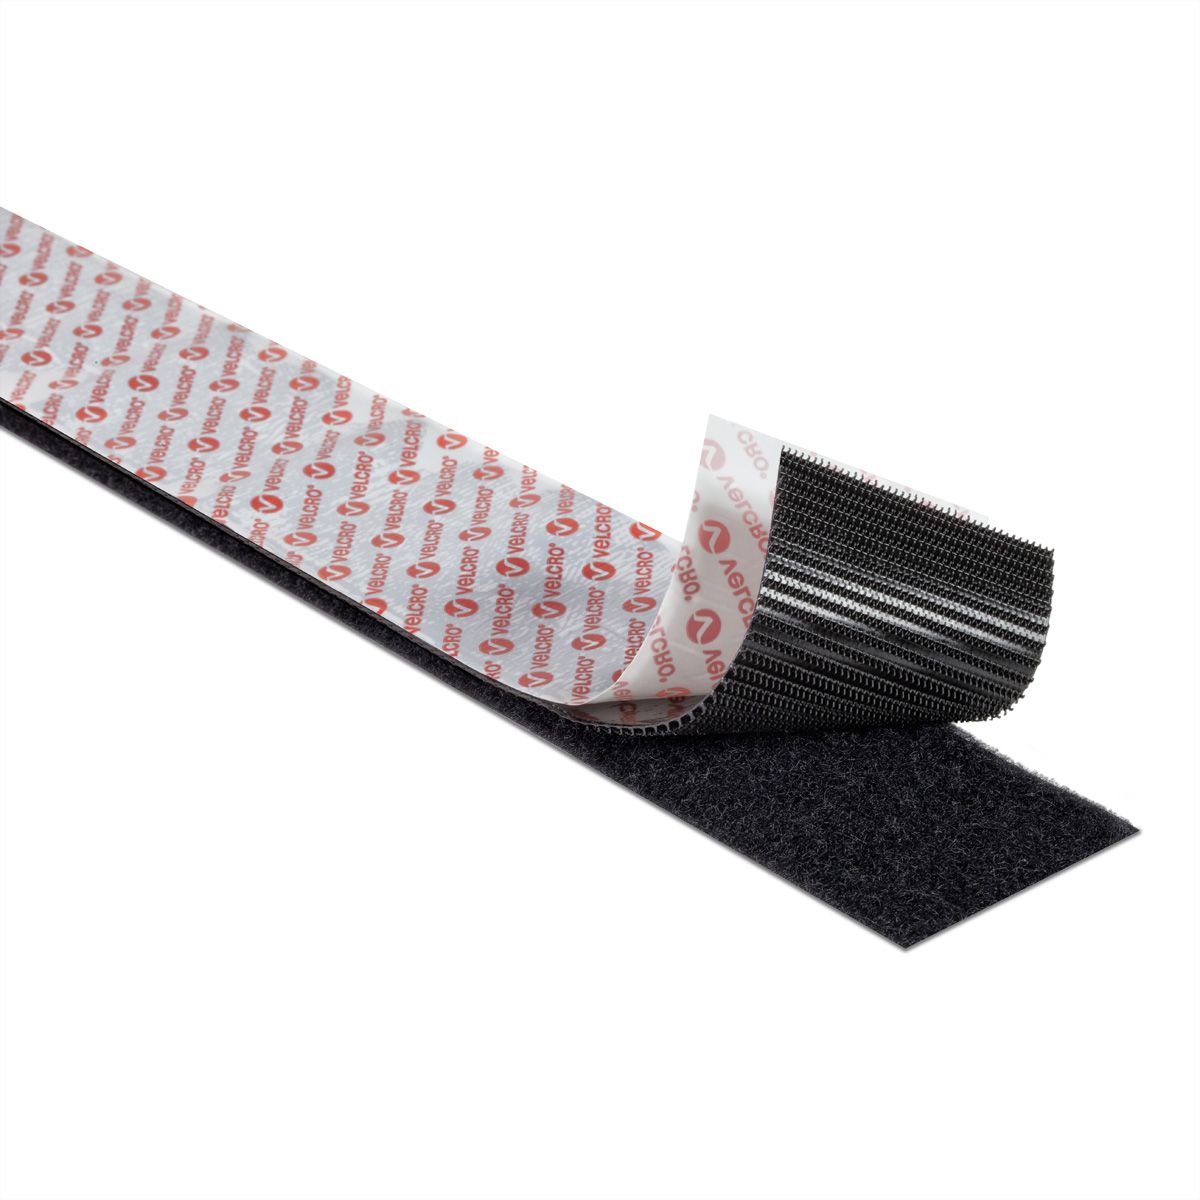 Toolico Klettband selbstklebend extra stark - 10M x 20mm